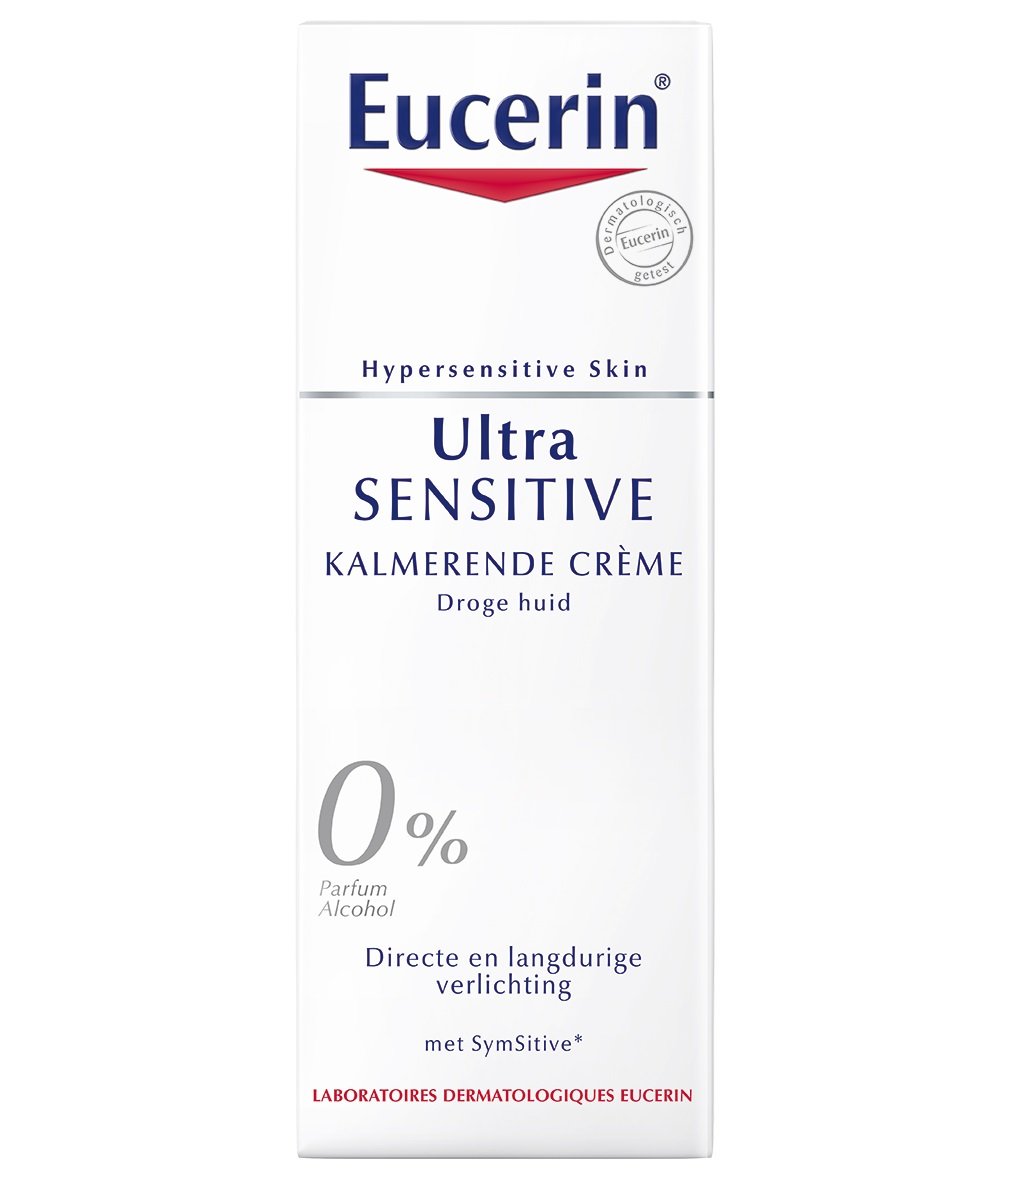 UltraSENSITIVE Kalmerende crème - Droge huid - SkinEffects Zwolle